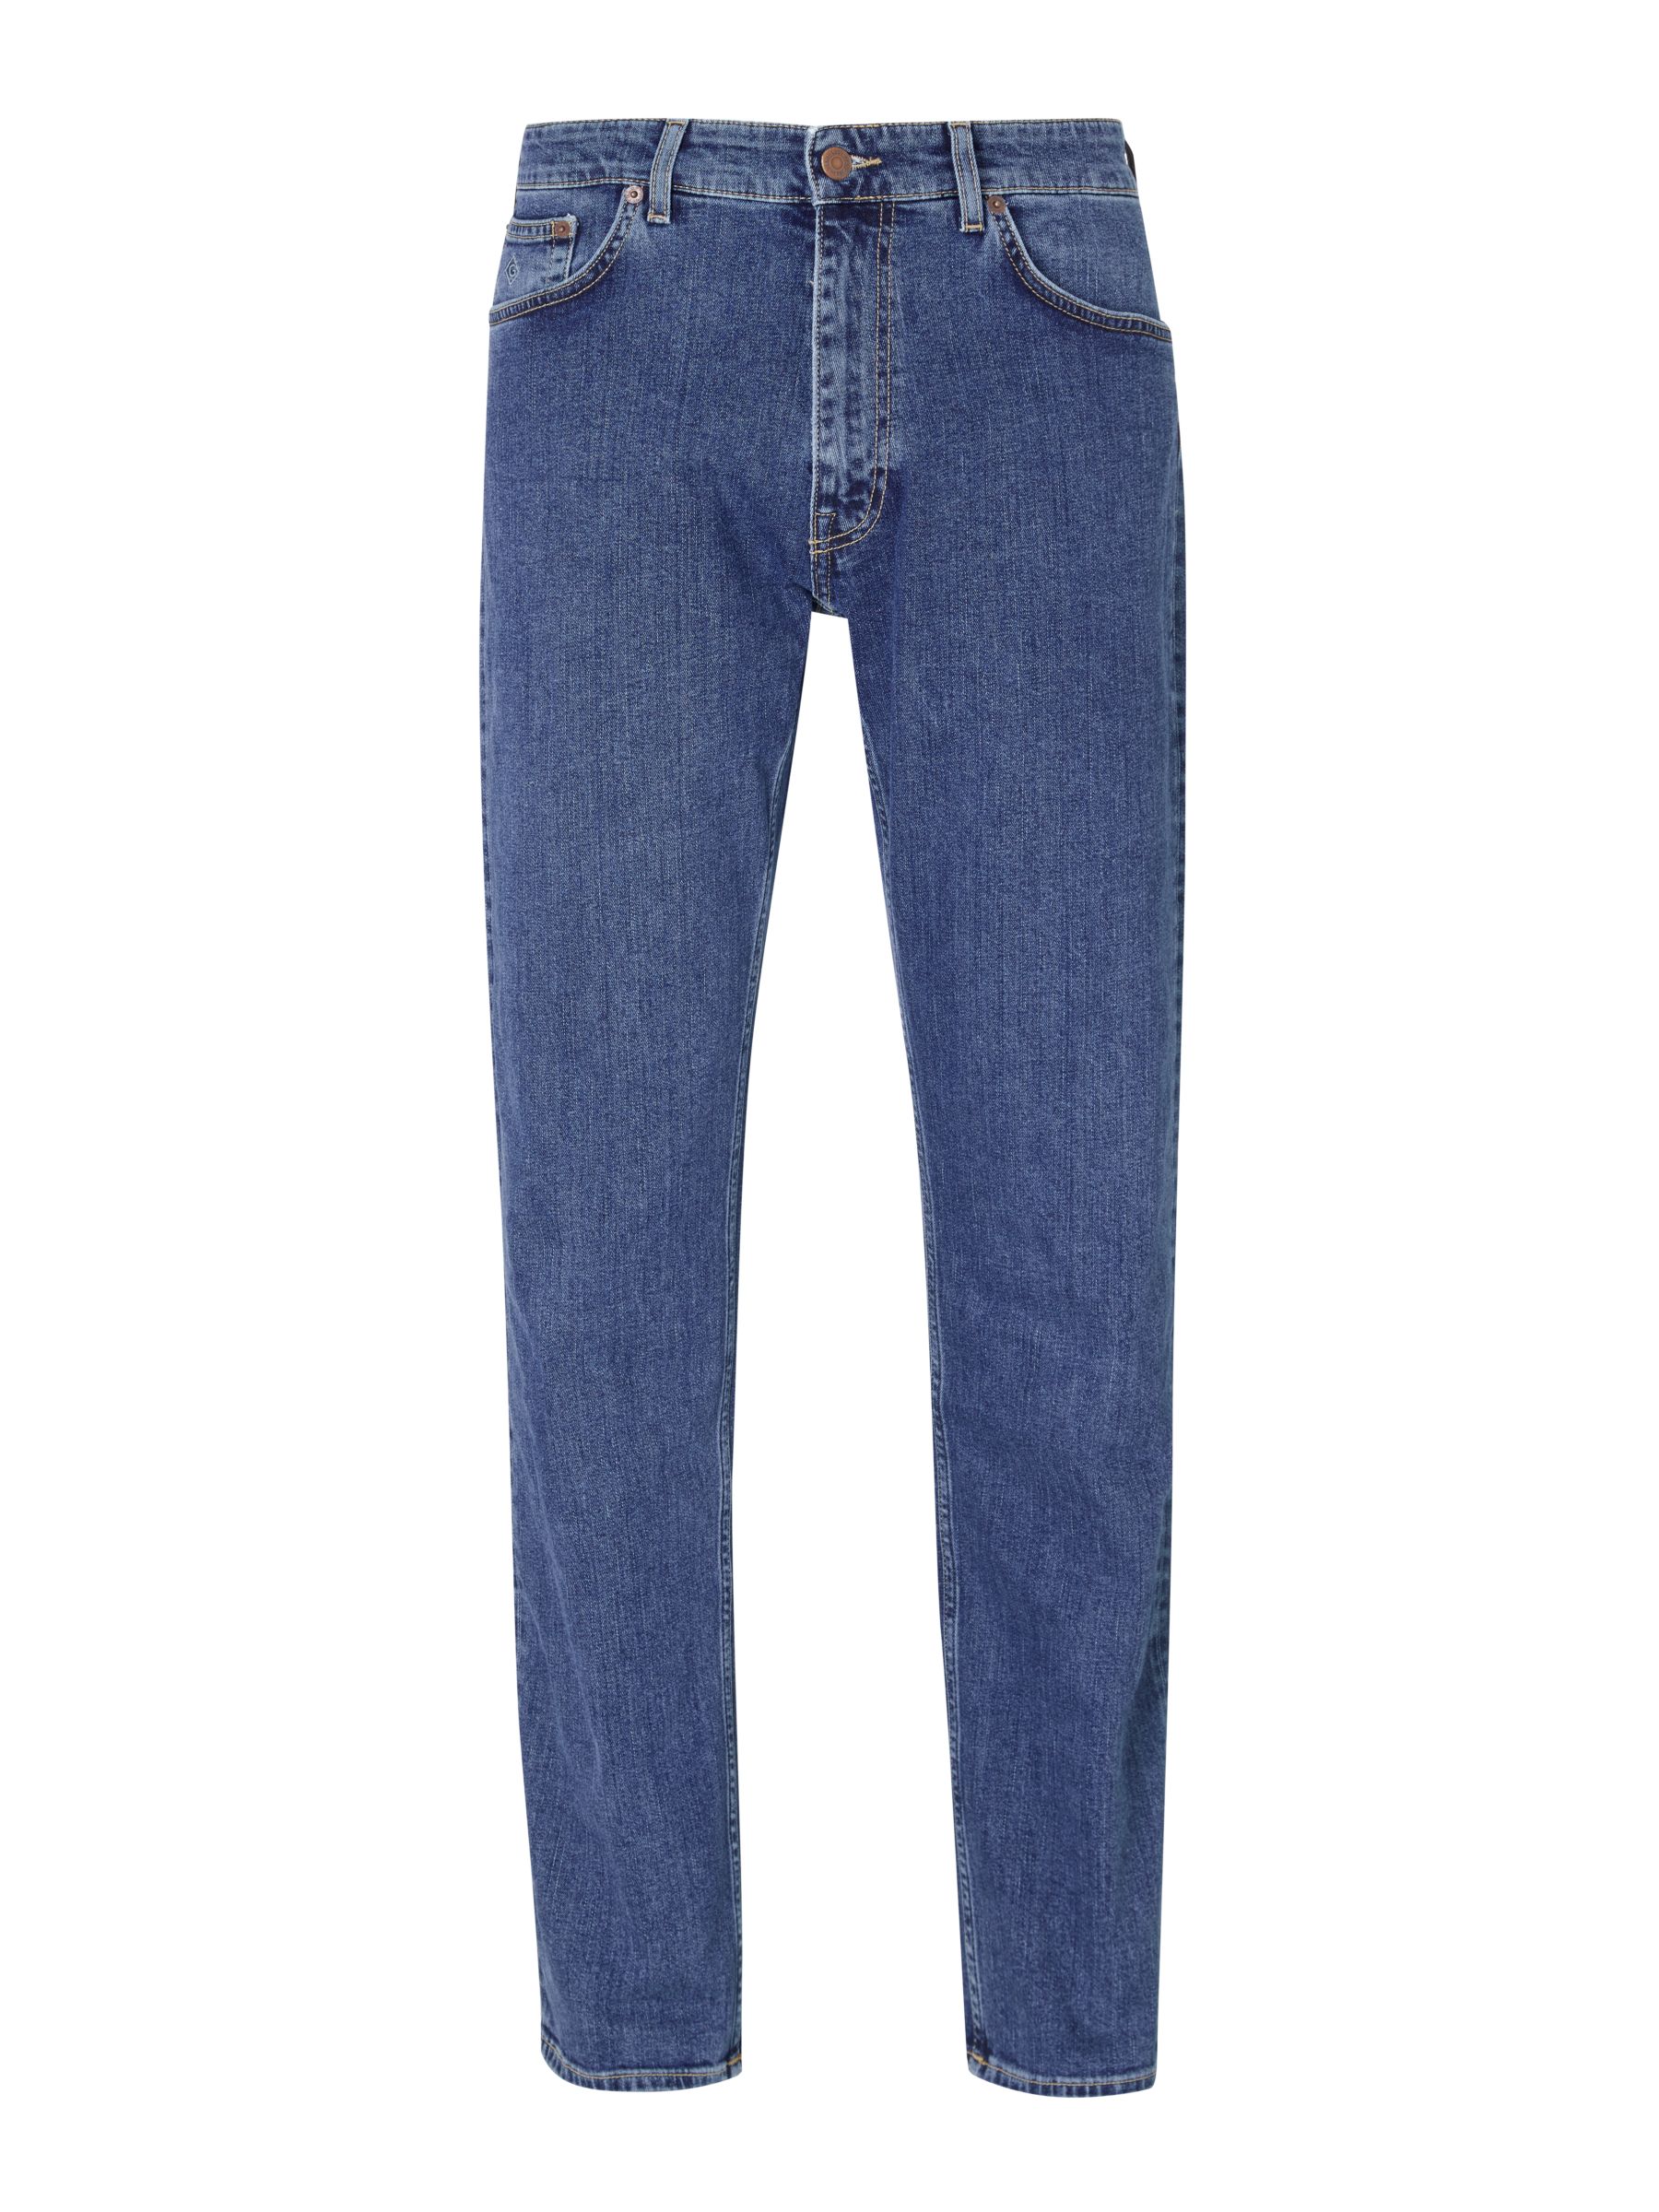 GANT 11 oz Comfort Regular Straight Jeans, Mid Blue